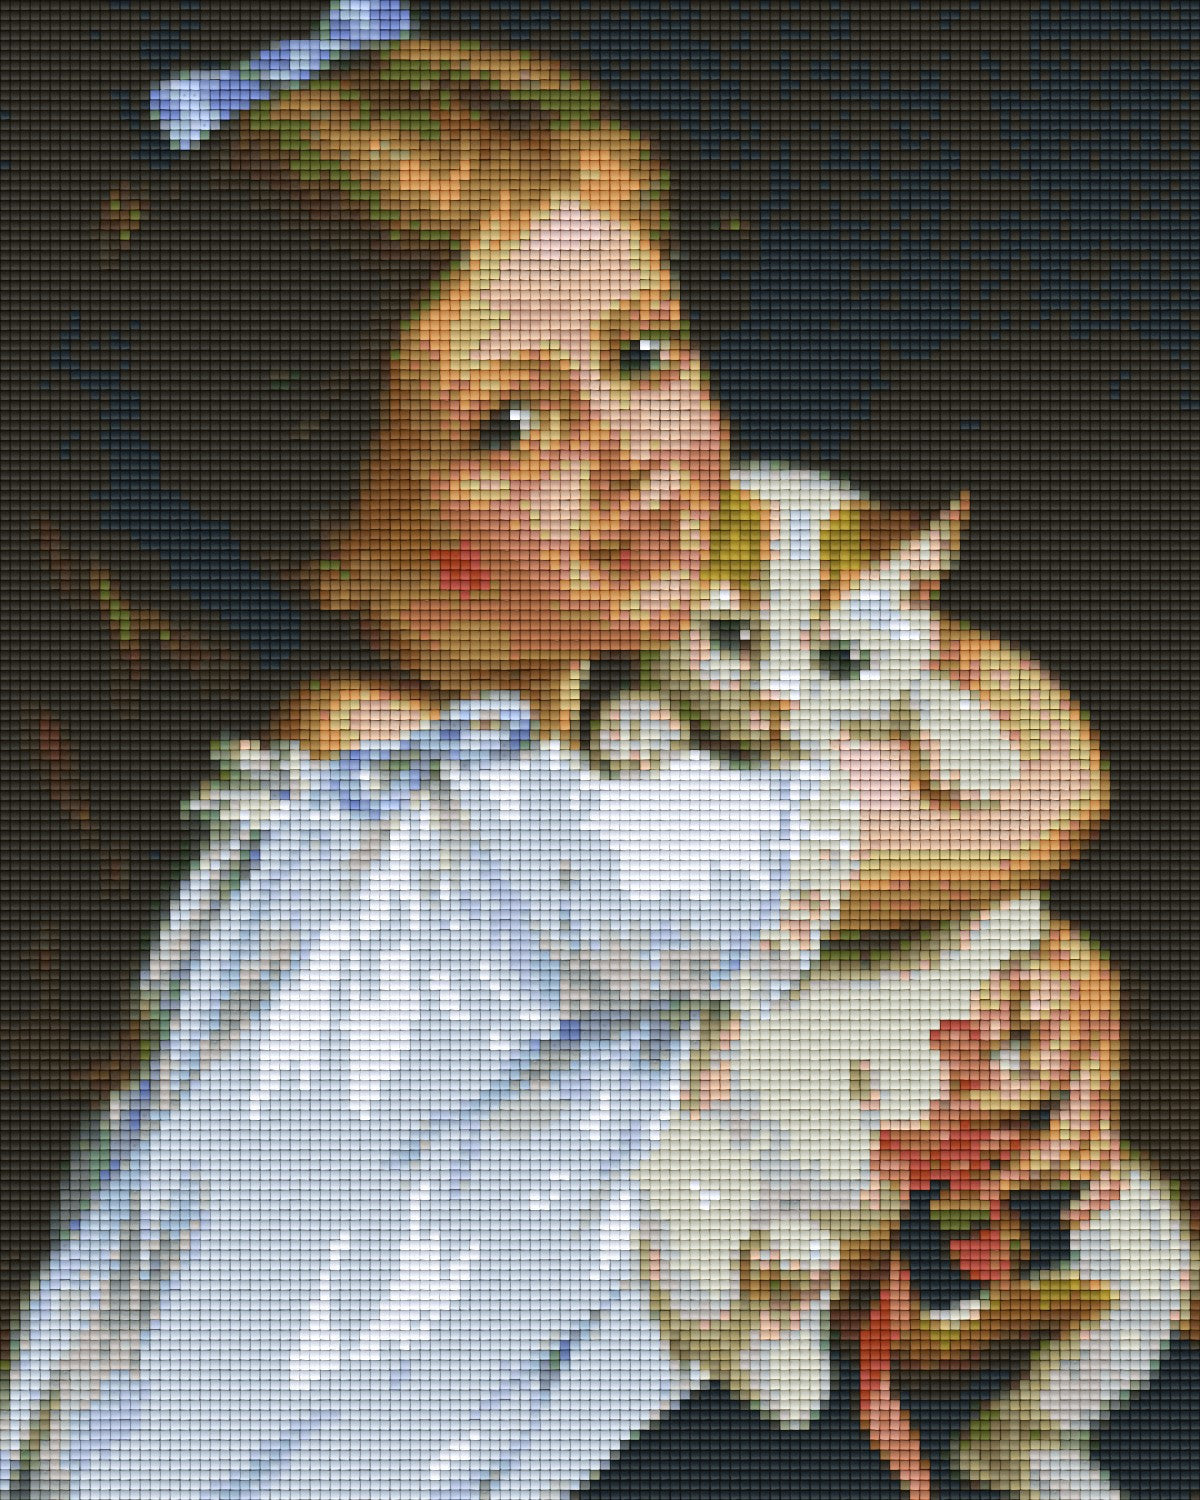 Pixelhobby Klassik Vorlage - Mädchen mit Katze